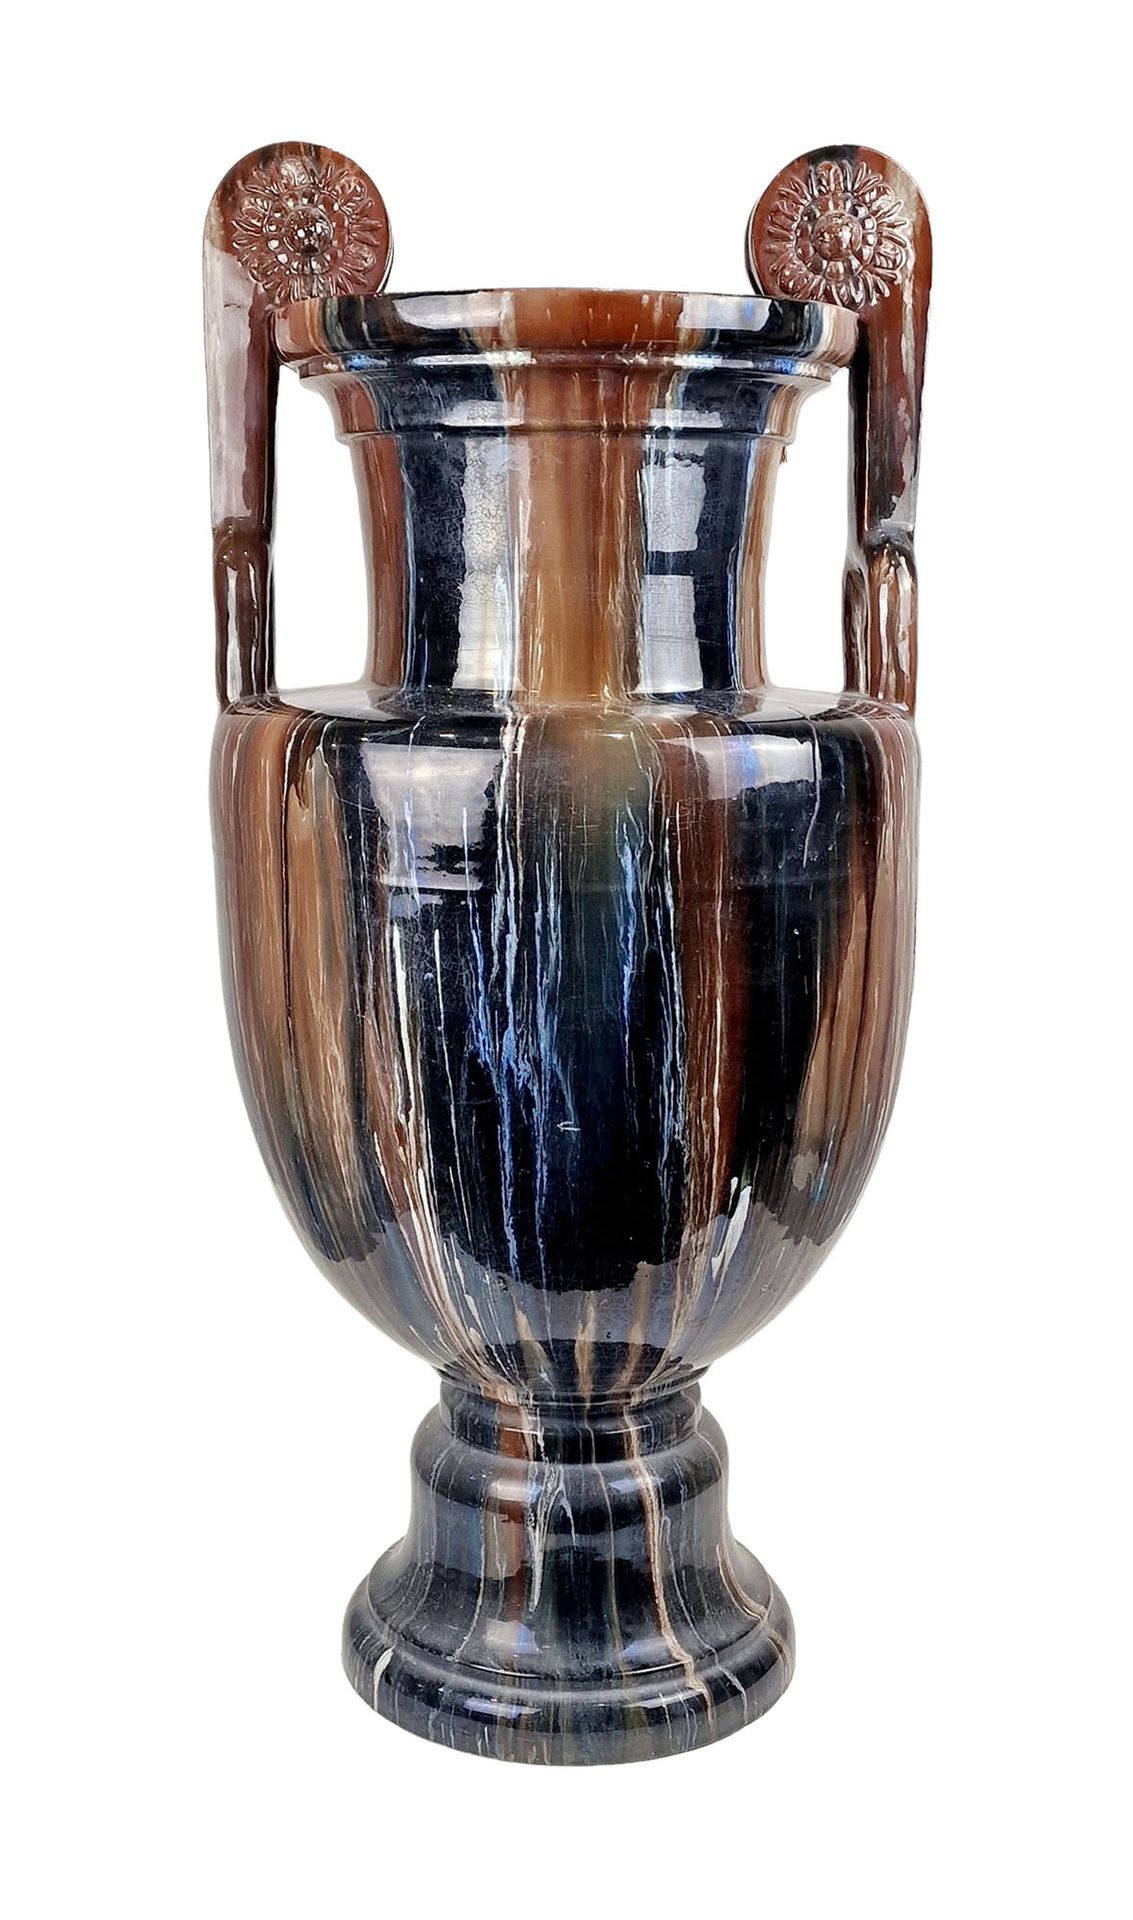 ATTRIBUE AUX ATTELIERS MASSIER, VALLAURIS 大型双耳瓶花盆



美第奇造型，黑褐色釉面陶瓷。底部有剥落。

尺寸：88&hellip;